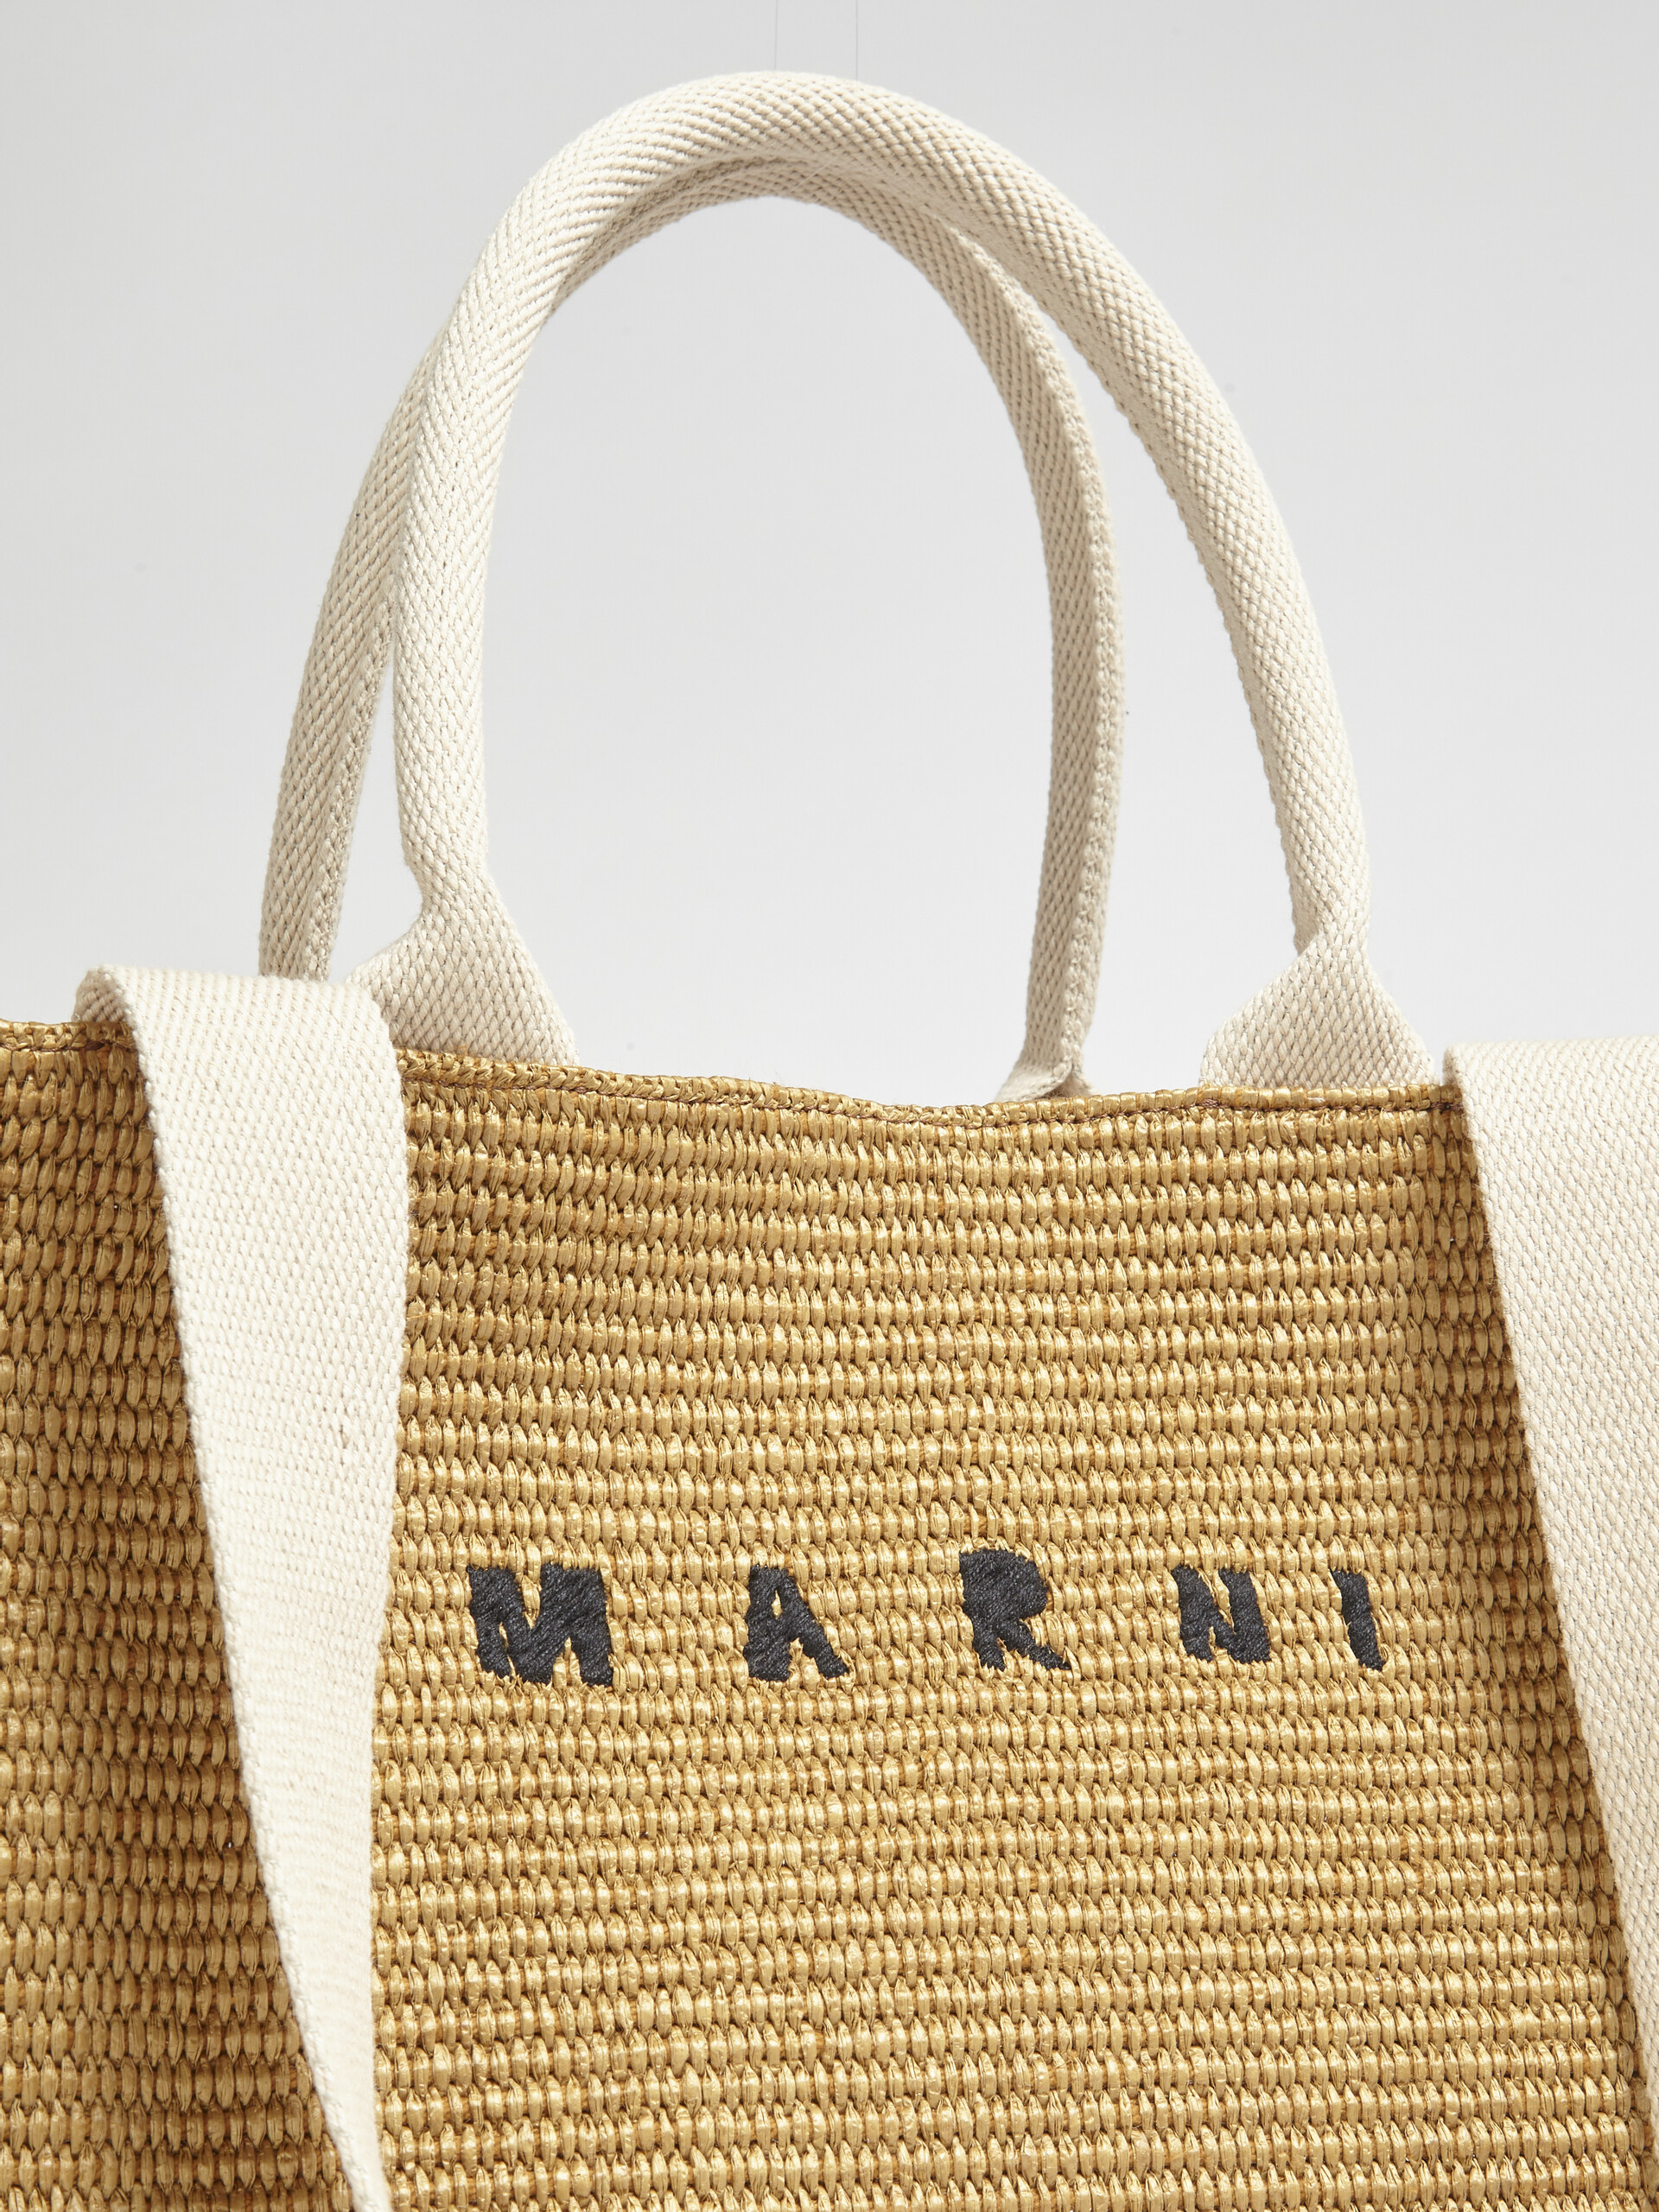 Raffia shopping bag - Shopping Bags - Image 4